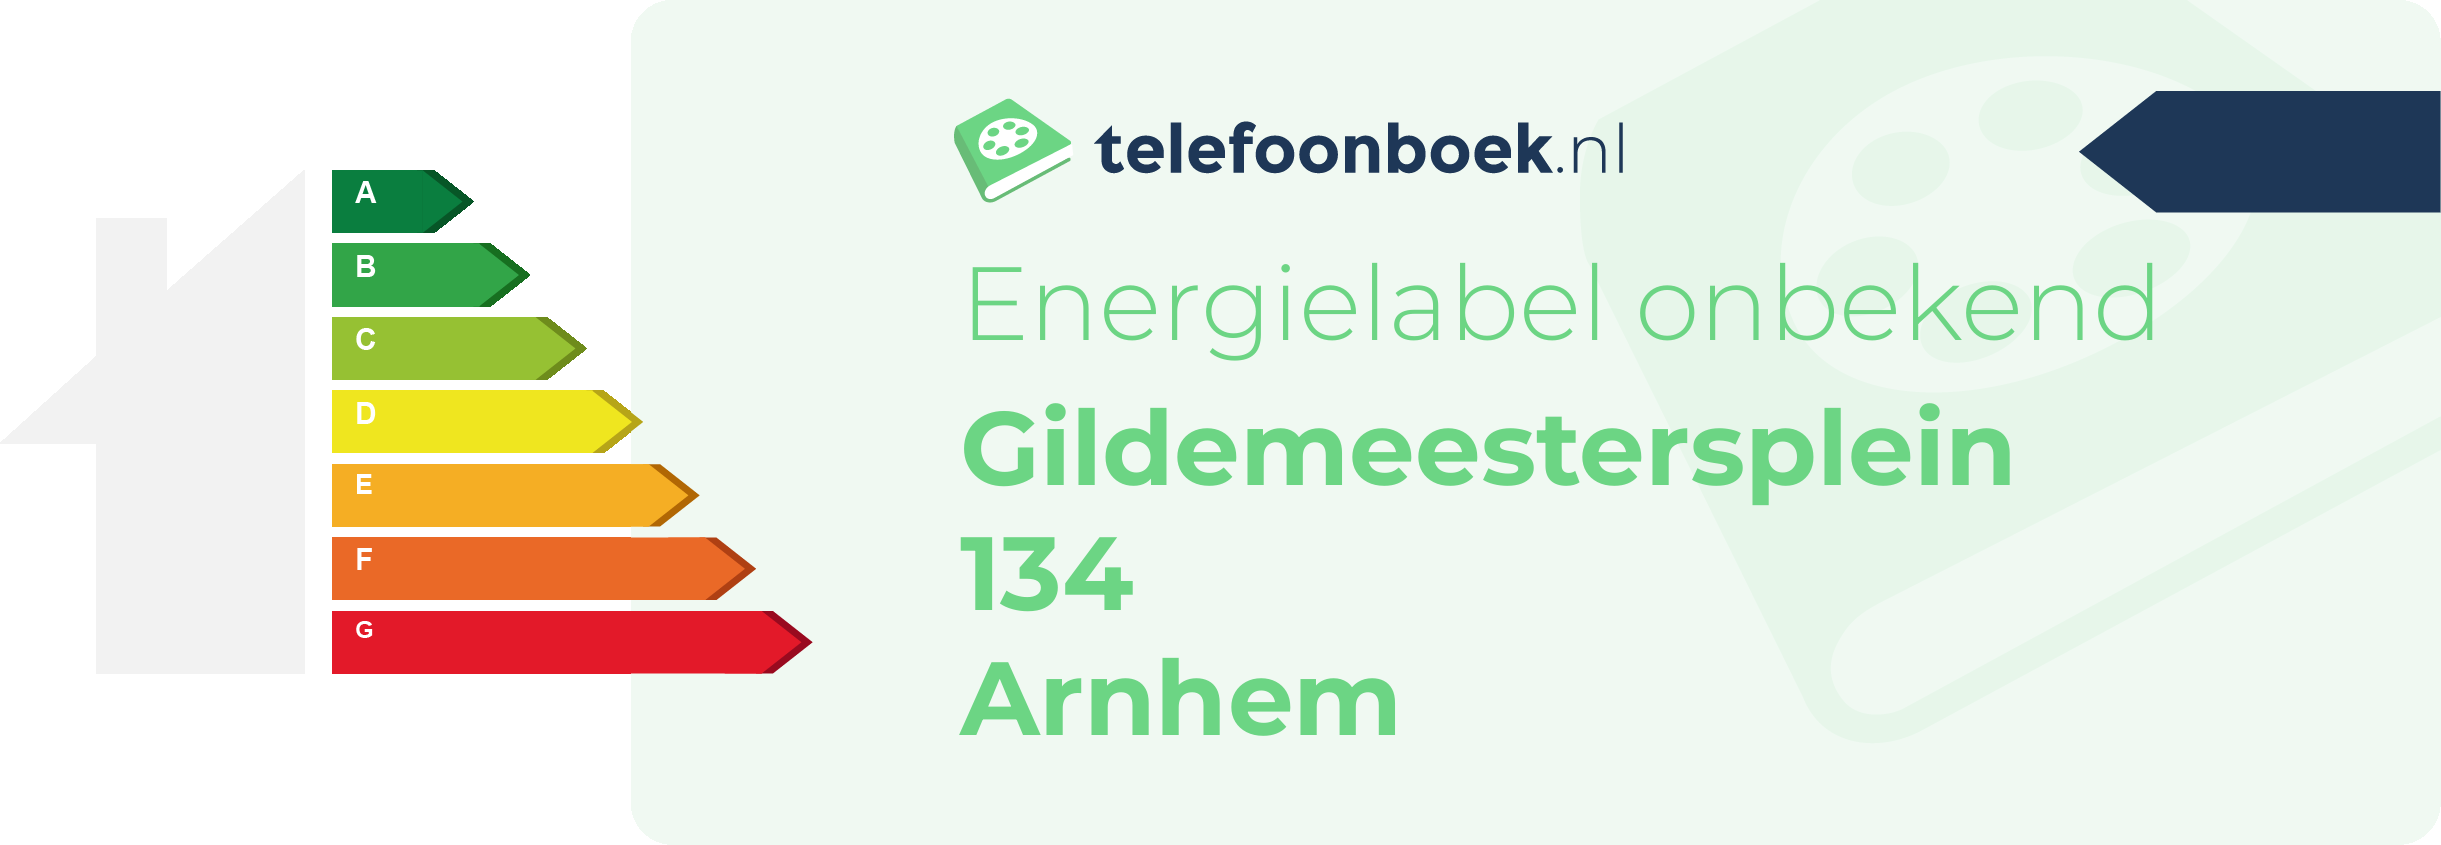 Energielabel Gildemeestersplein 134 Arnhem